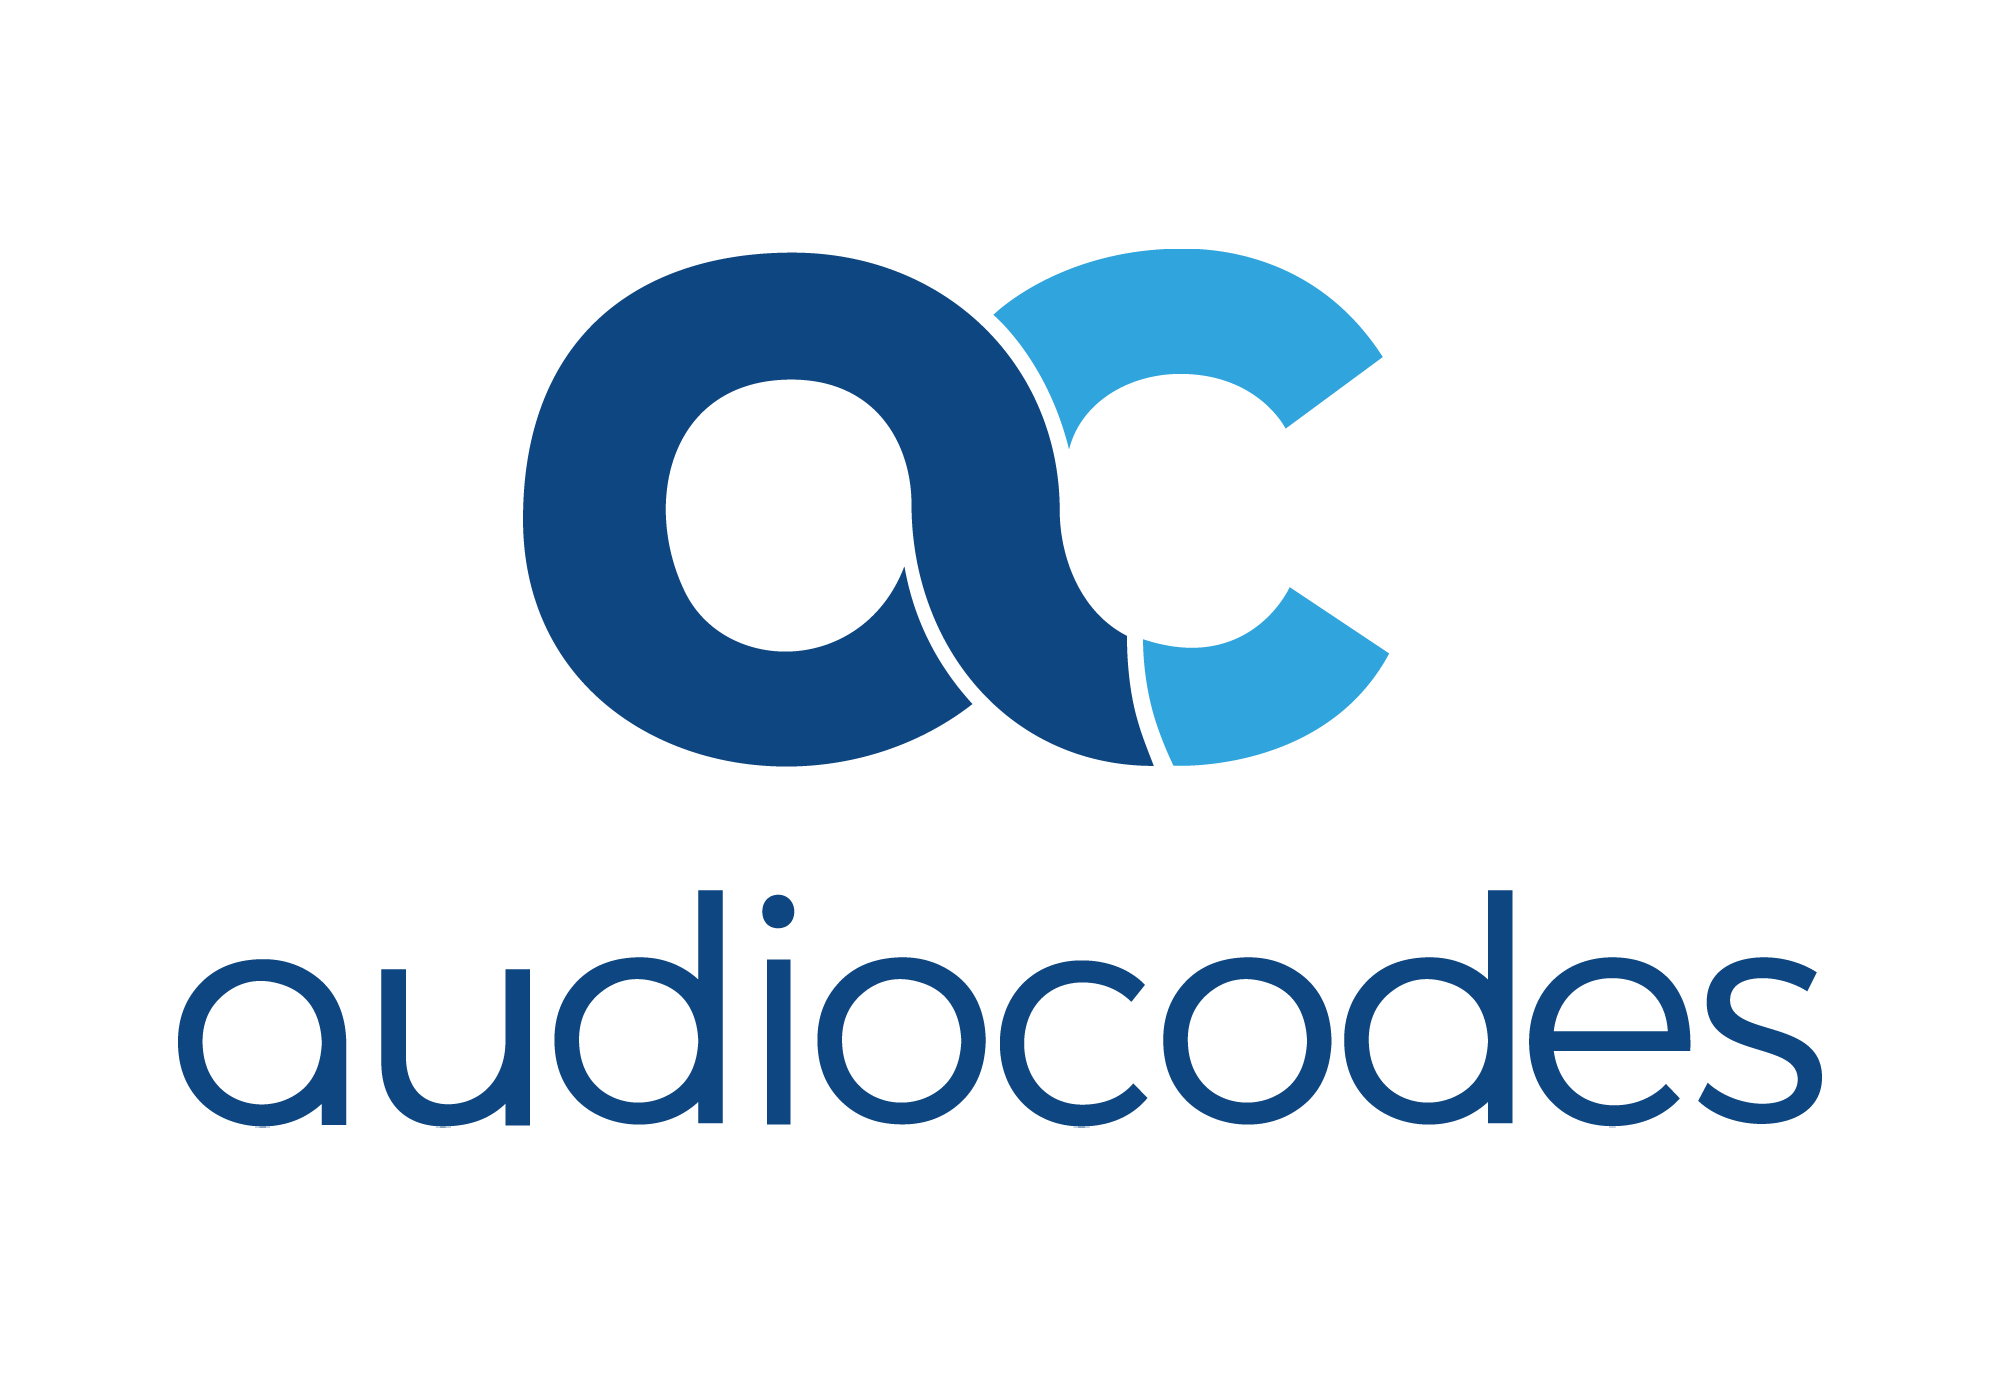 audiocodes_logo